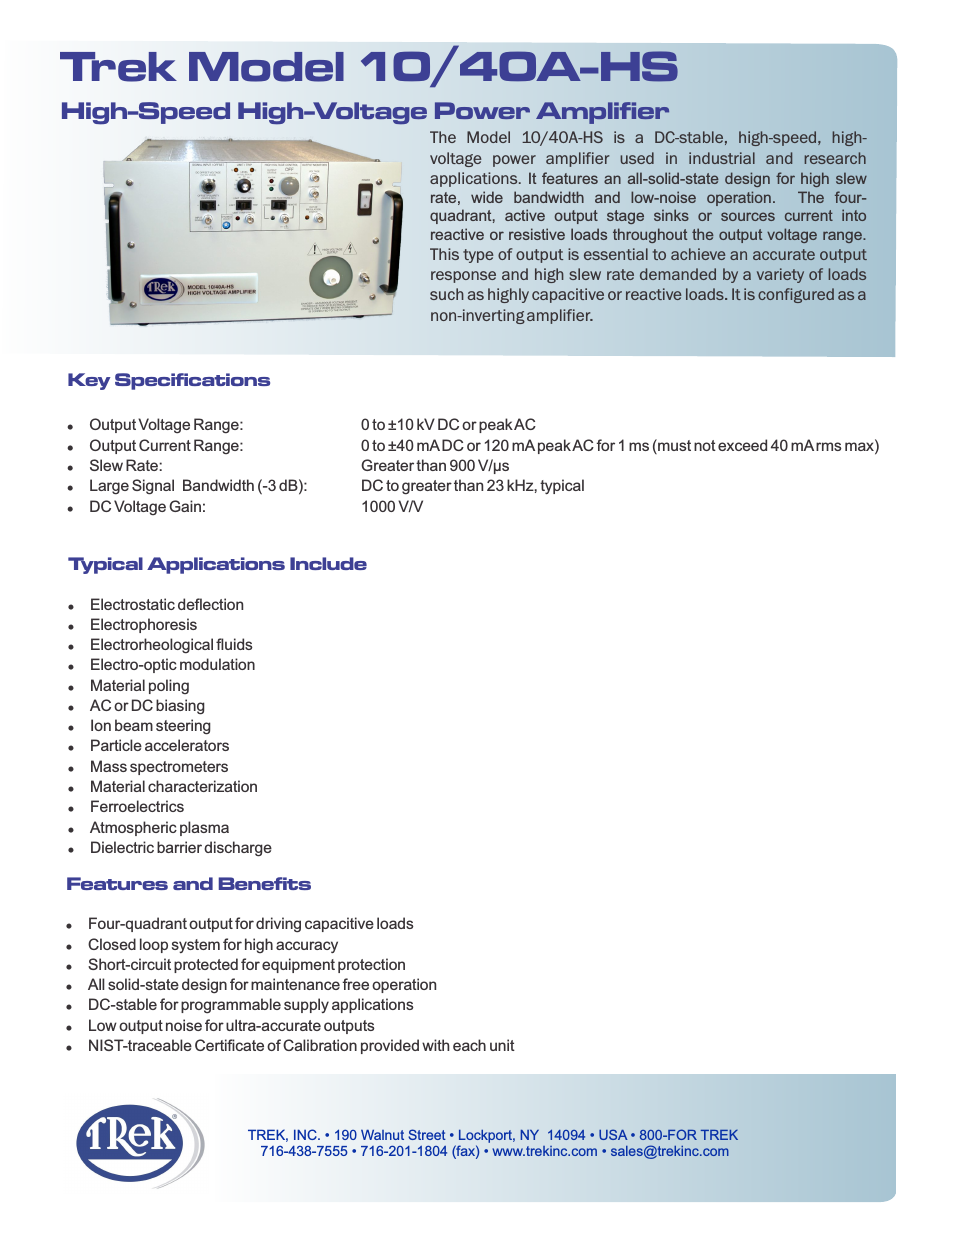 10-40A-hs High-Voltage Power Amplifier